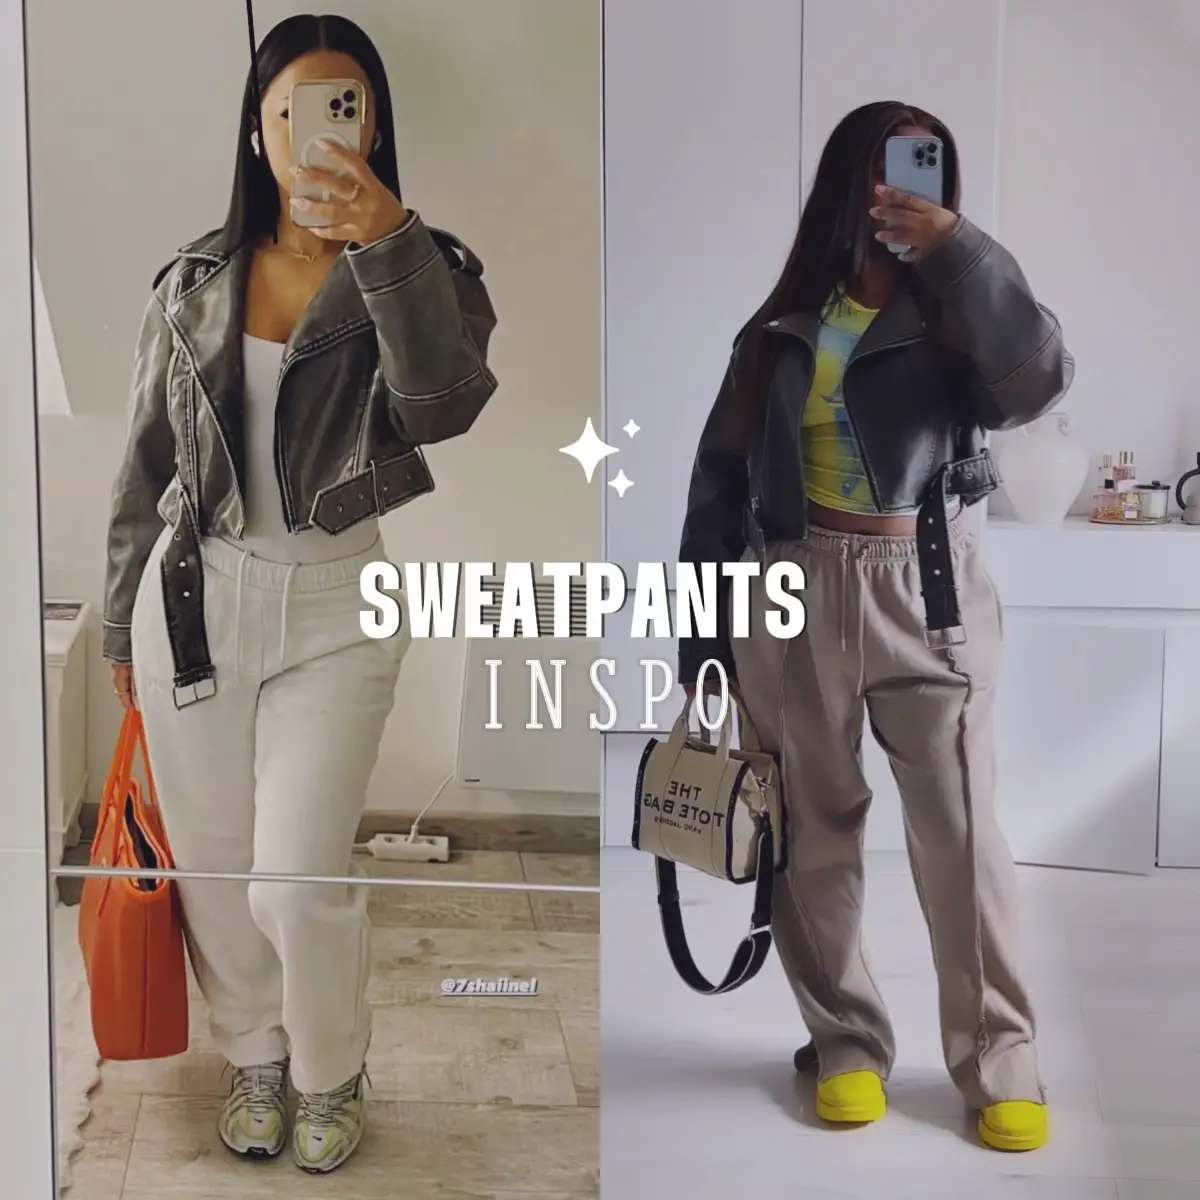 🤍 hollister grey sweatpants 🤍 -fits true to size - Depop